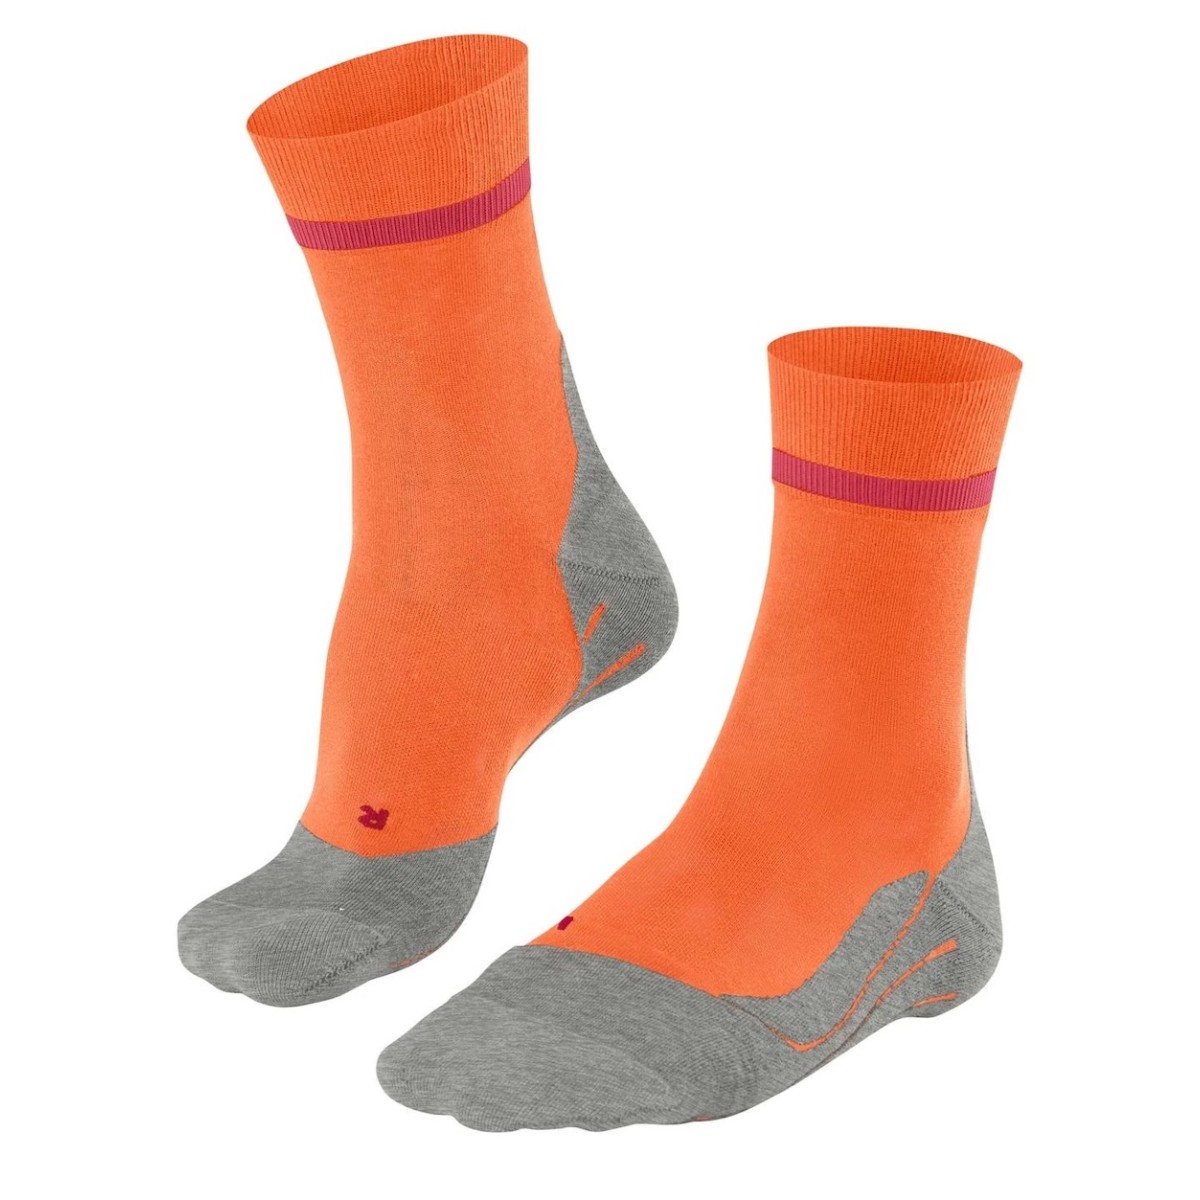 FALKE RU4 LADY socks - orange/grey